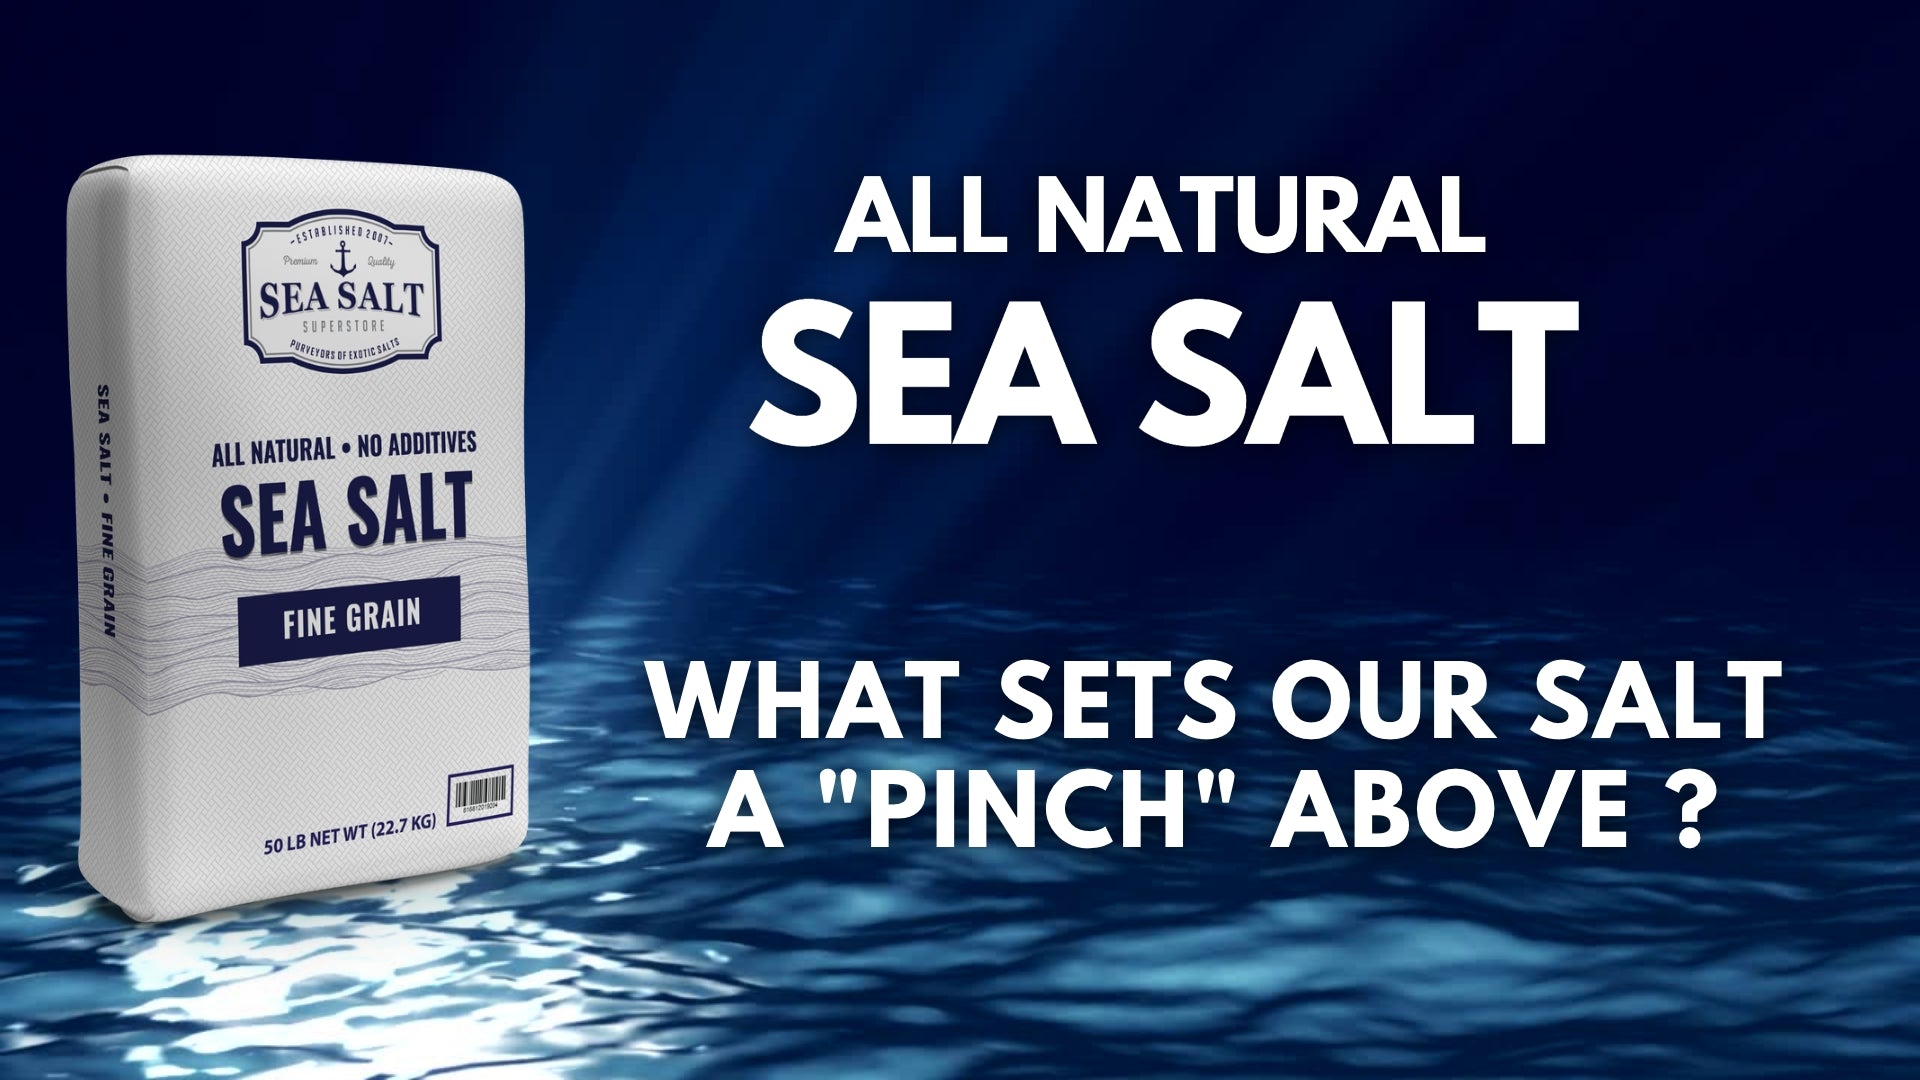 Load video: All Natural Sea Salt